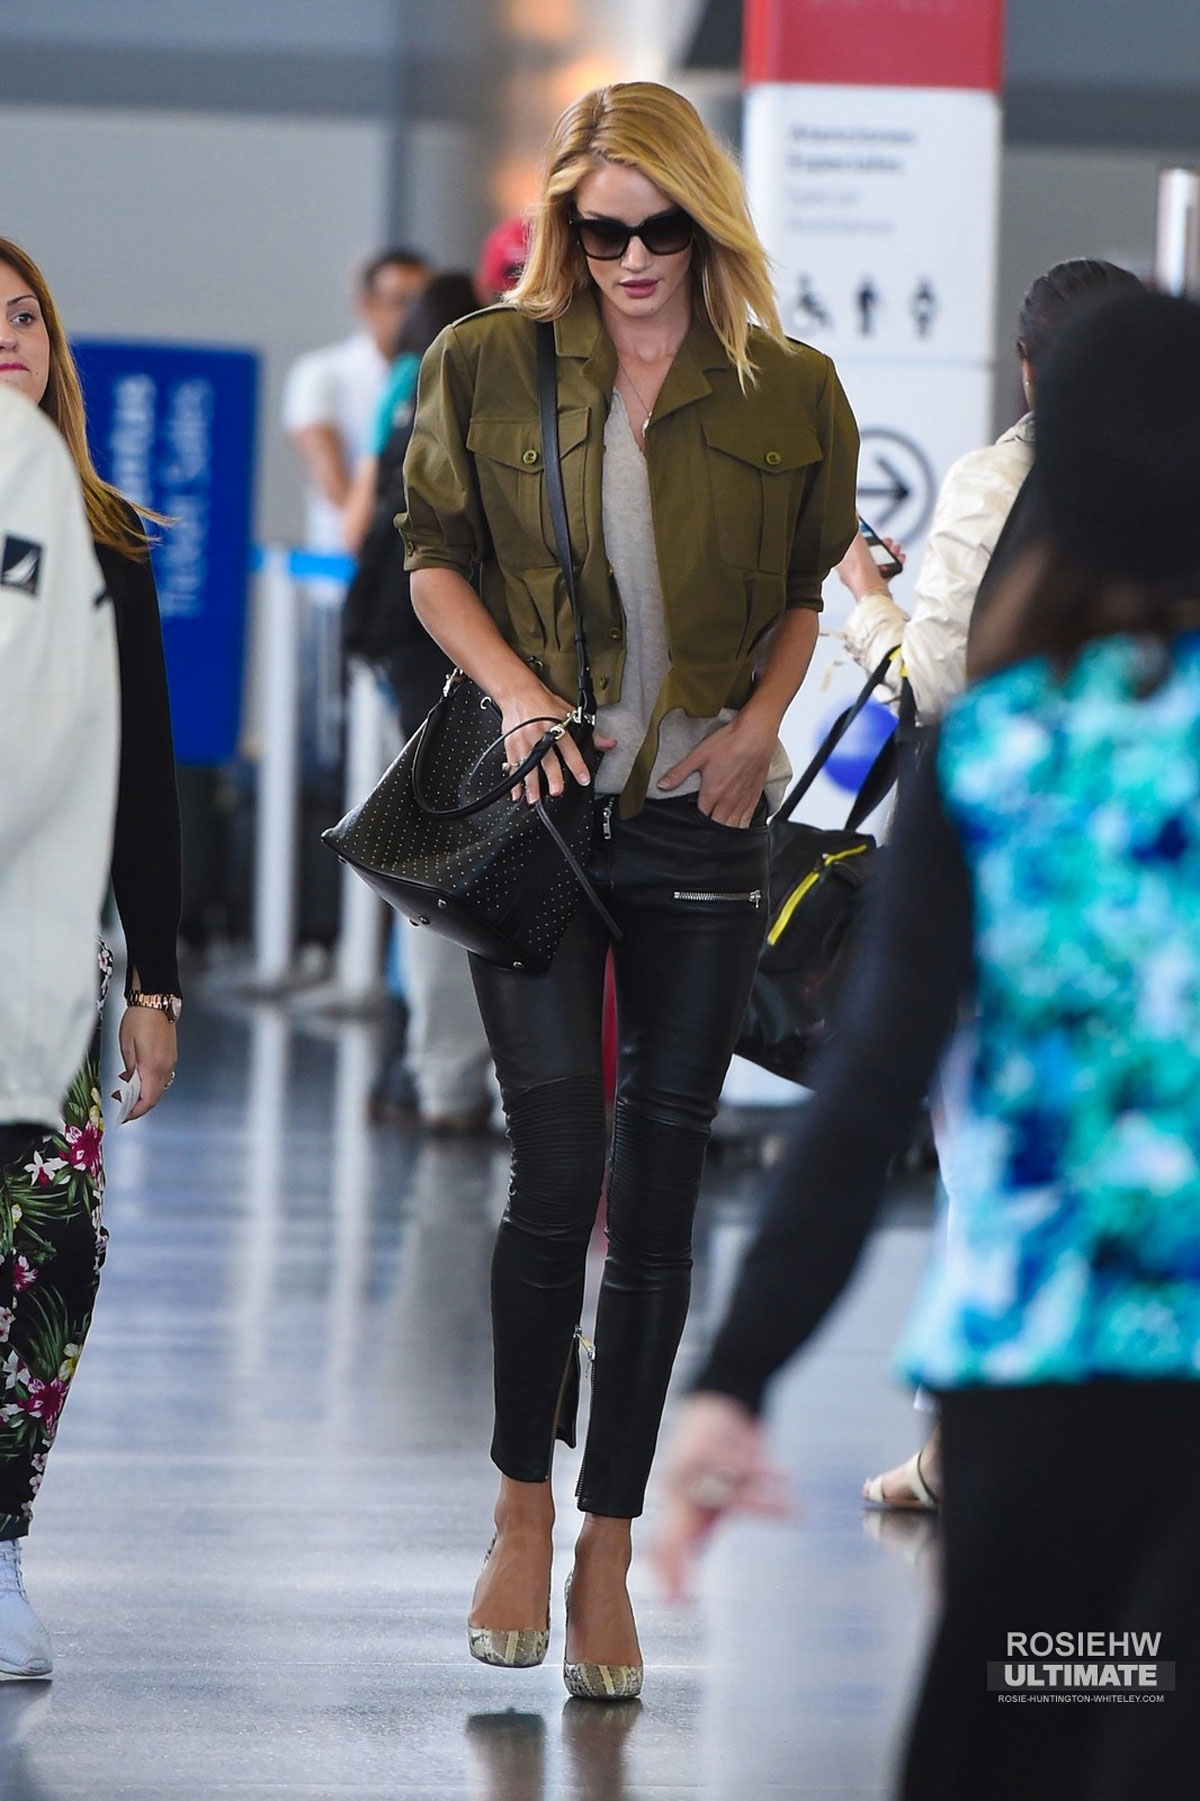 Rosie Huntington-Whiteley arrives at JFK airport